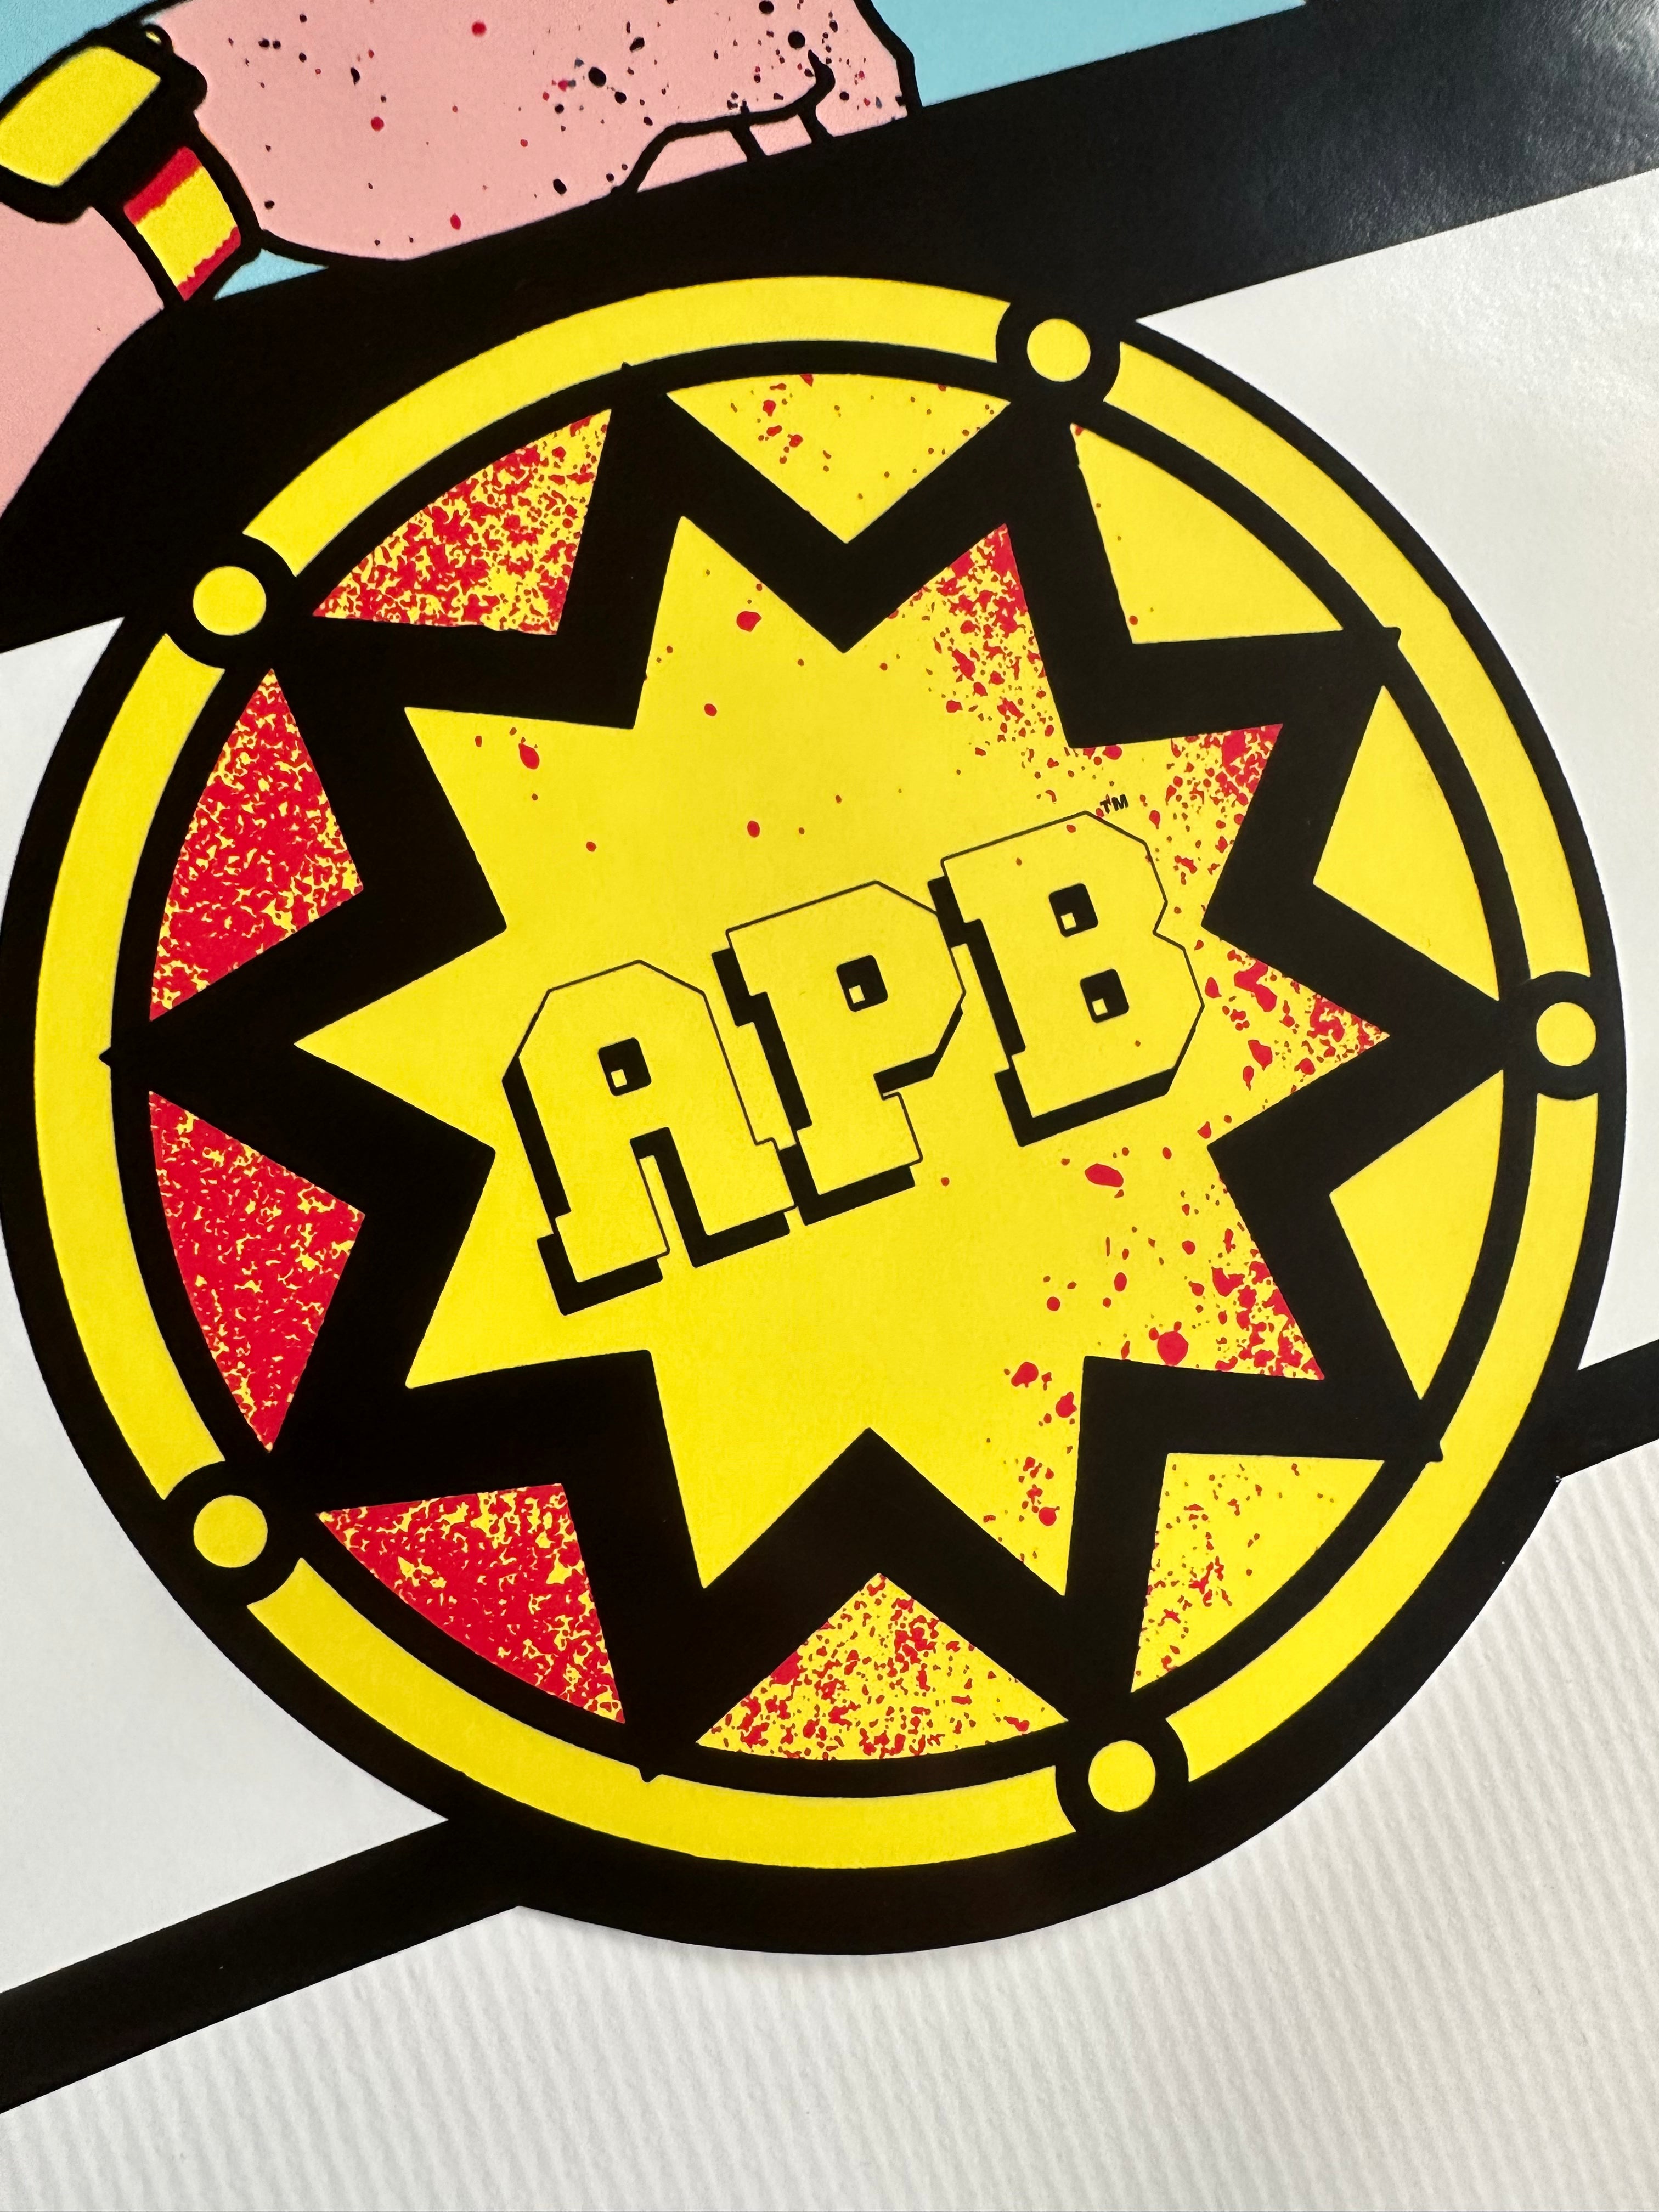 APB (All Points Bulletin) Side Art